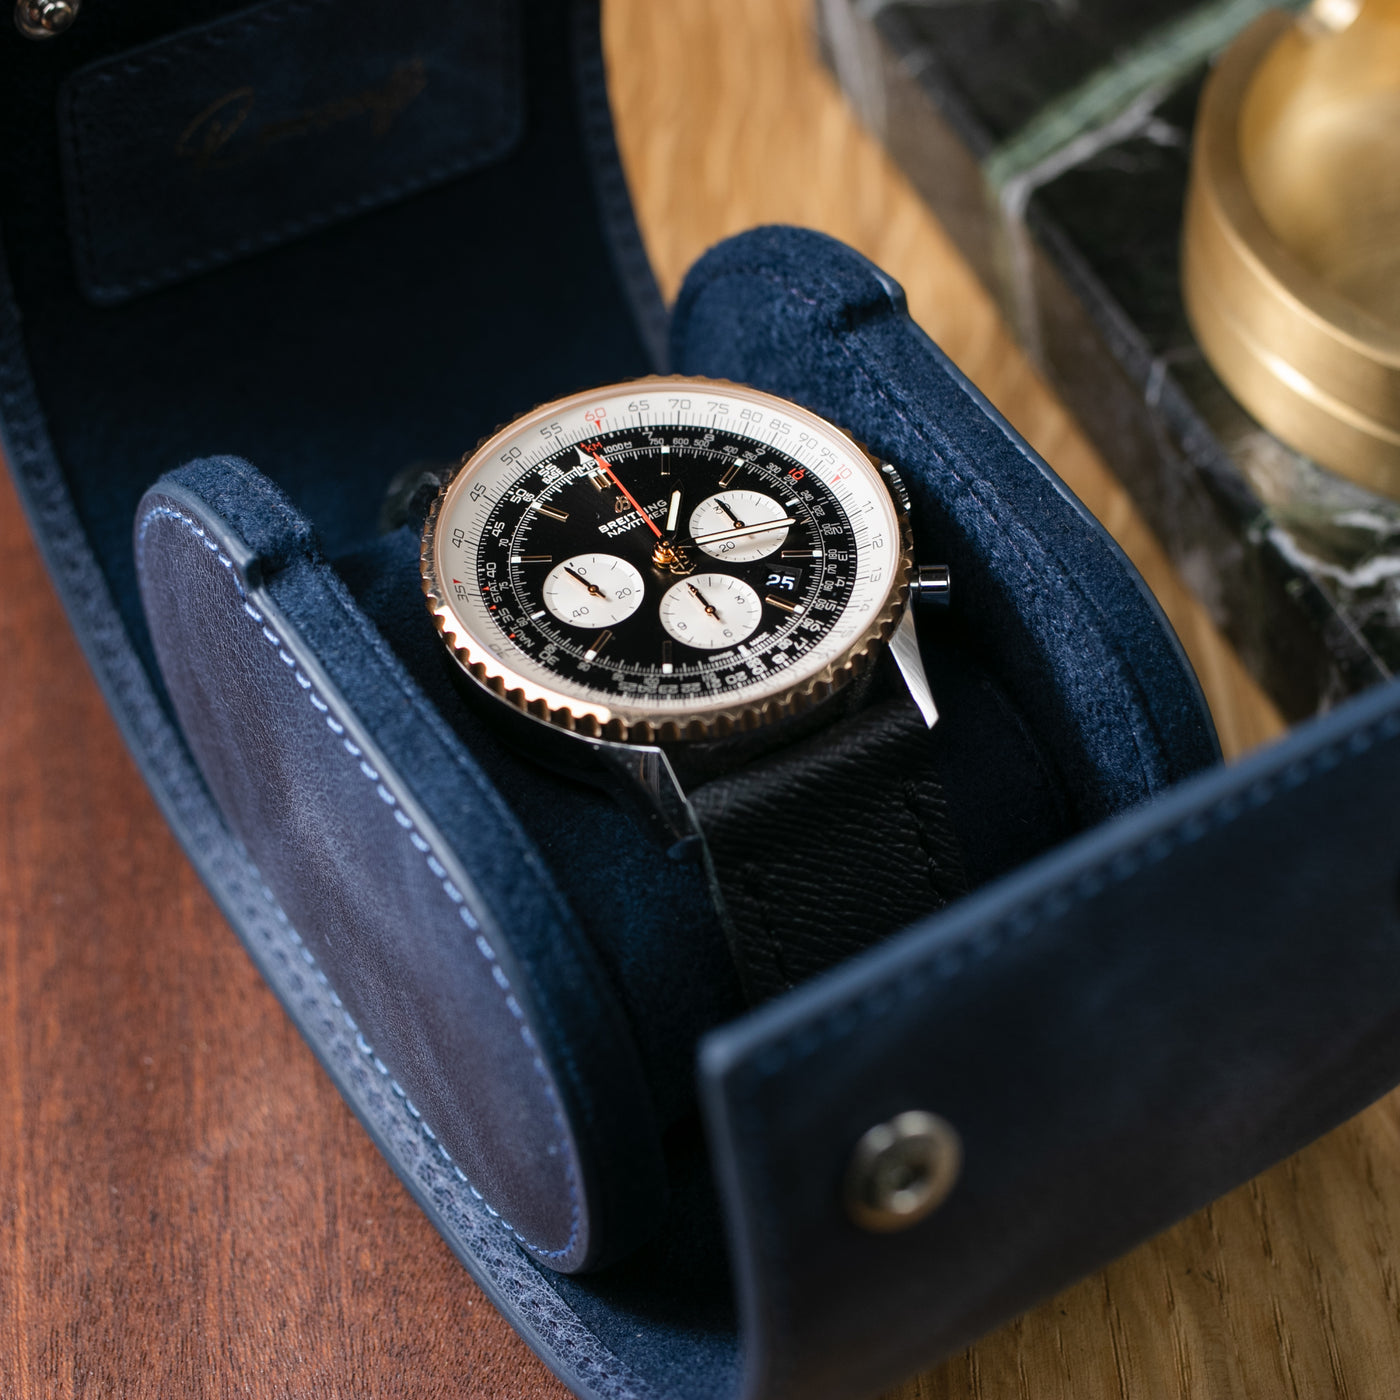 Leather Travel Watch Case - Blue - Single Watch Roll